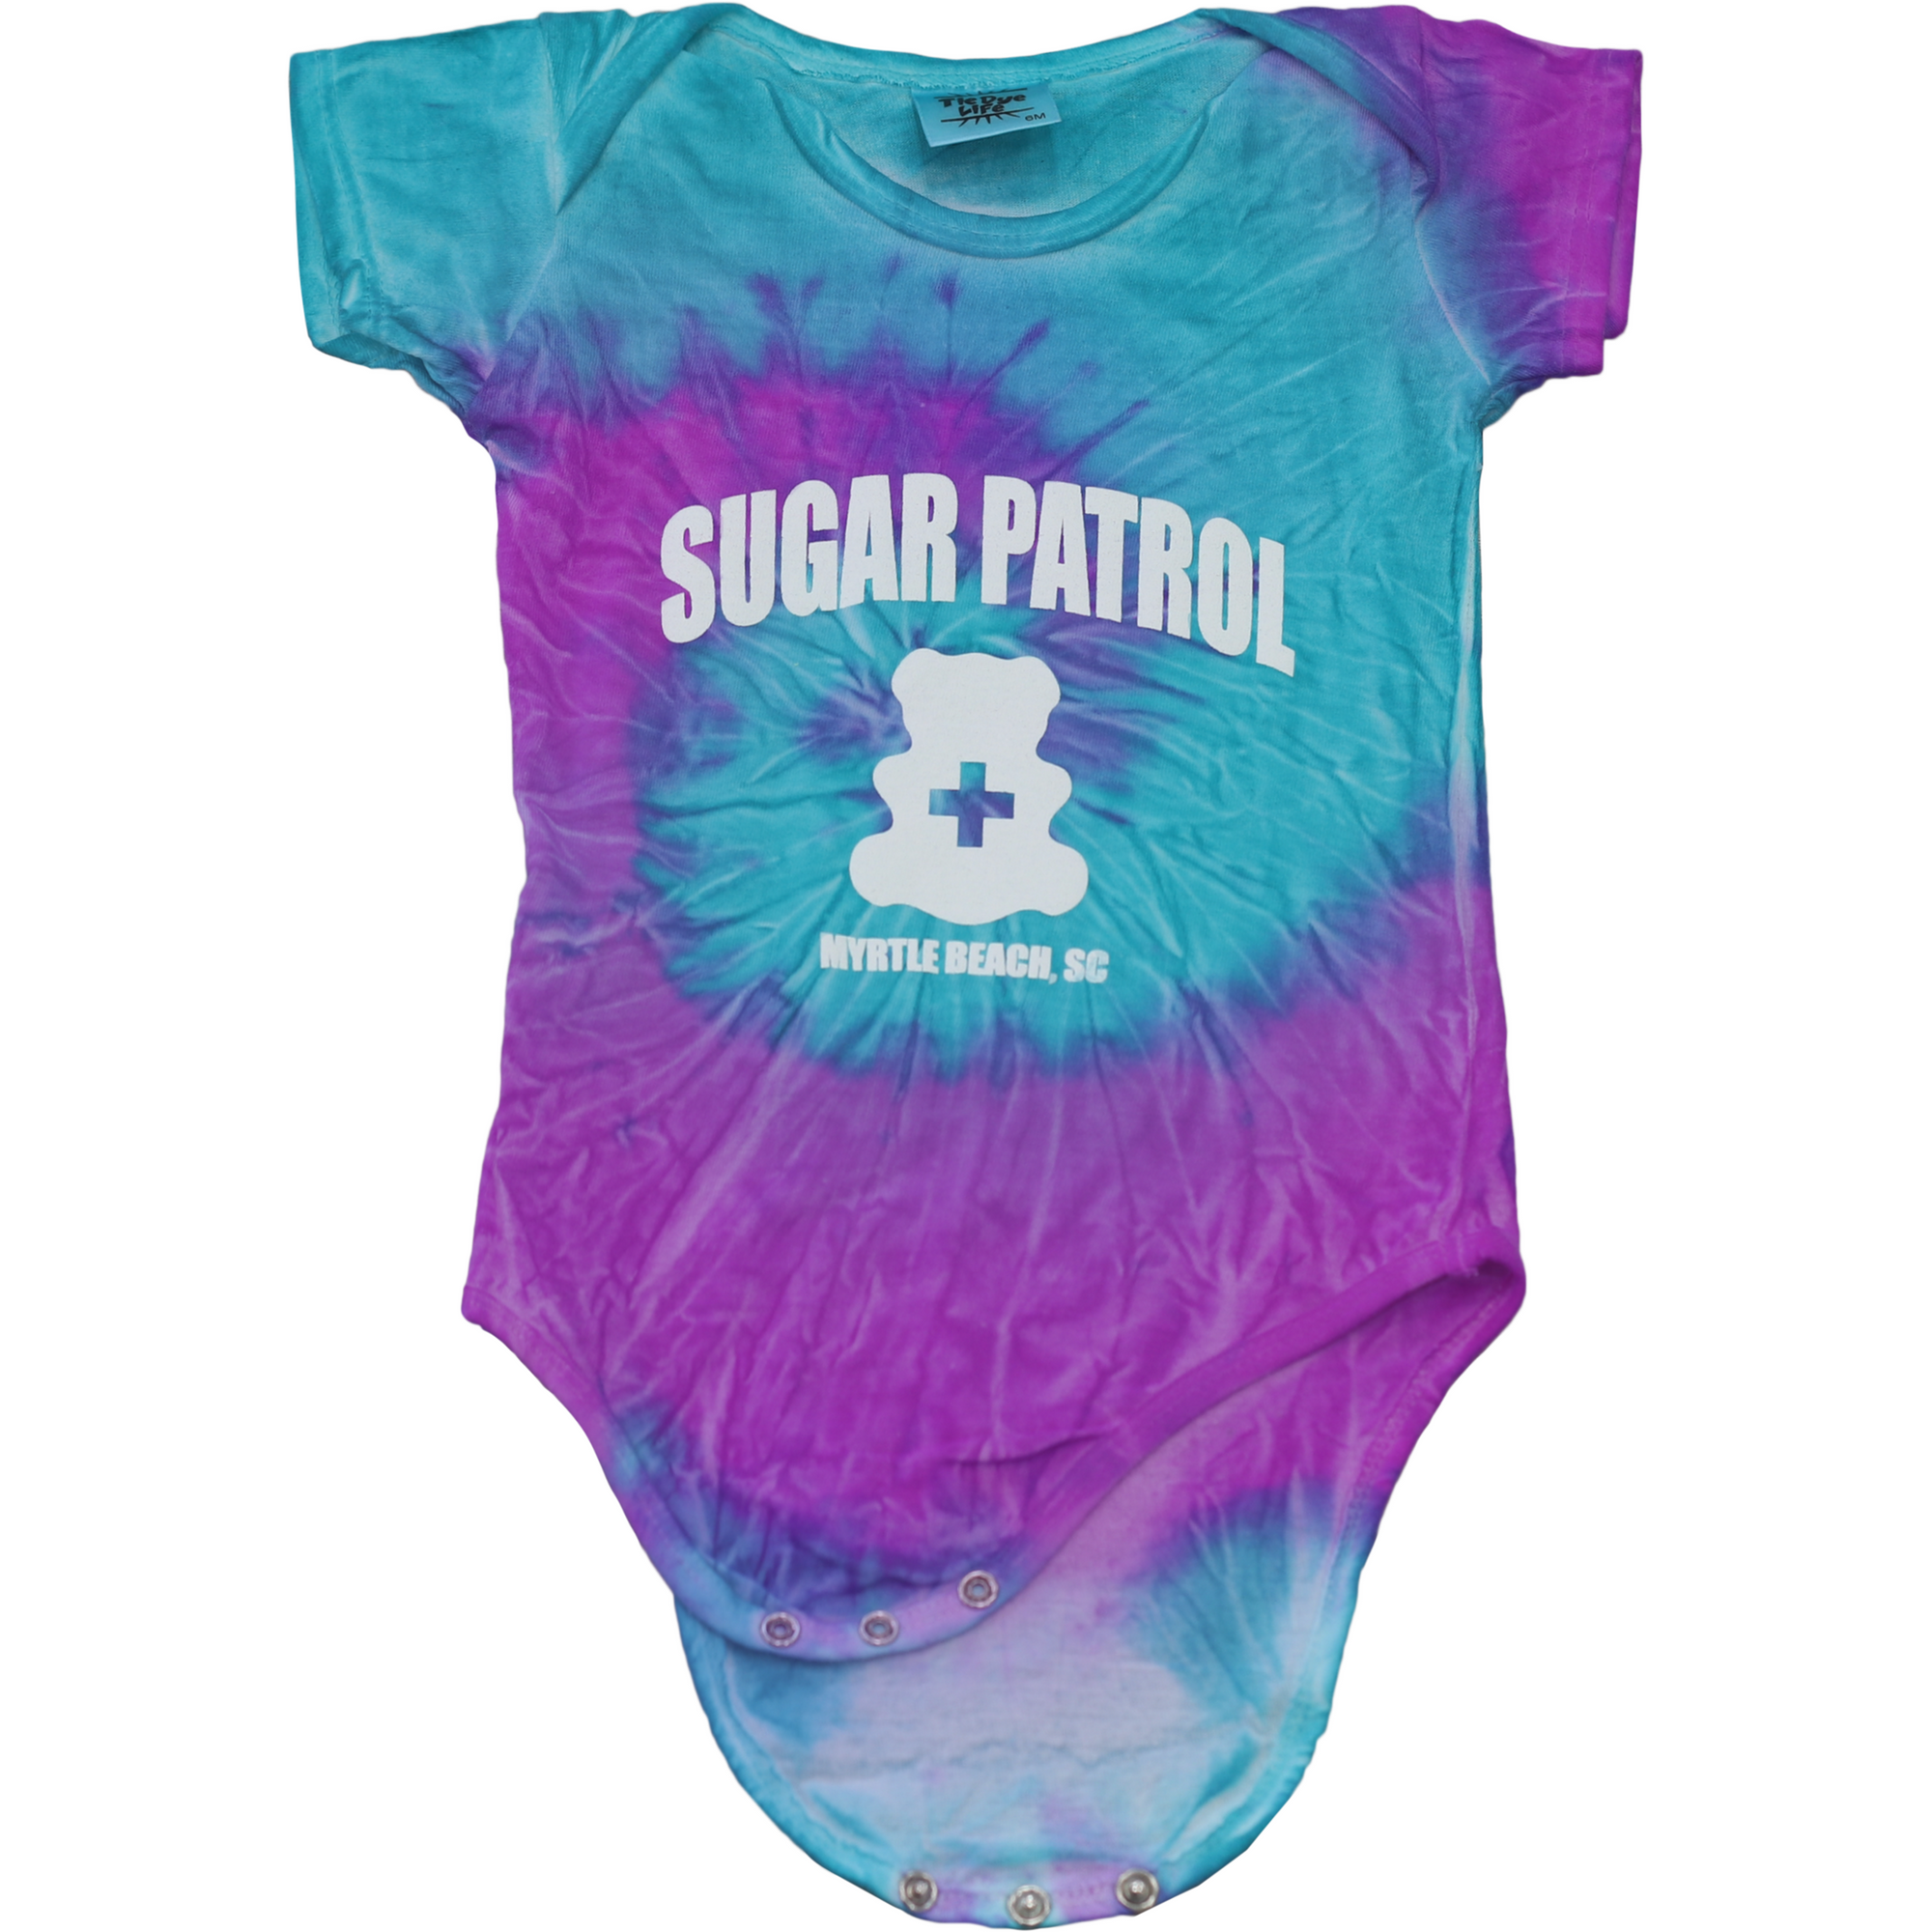 "Sugar Patrol" Infant Onesie - Purple Berry Jelly Donut Tie Dye